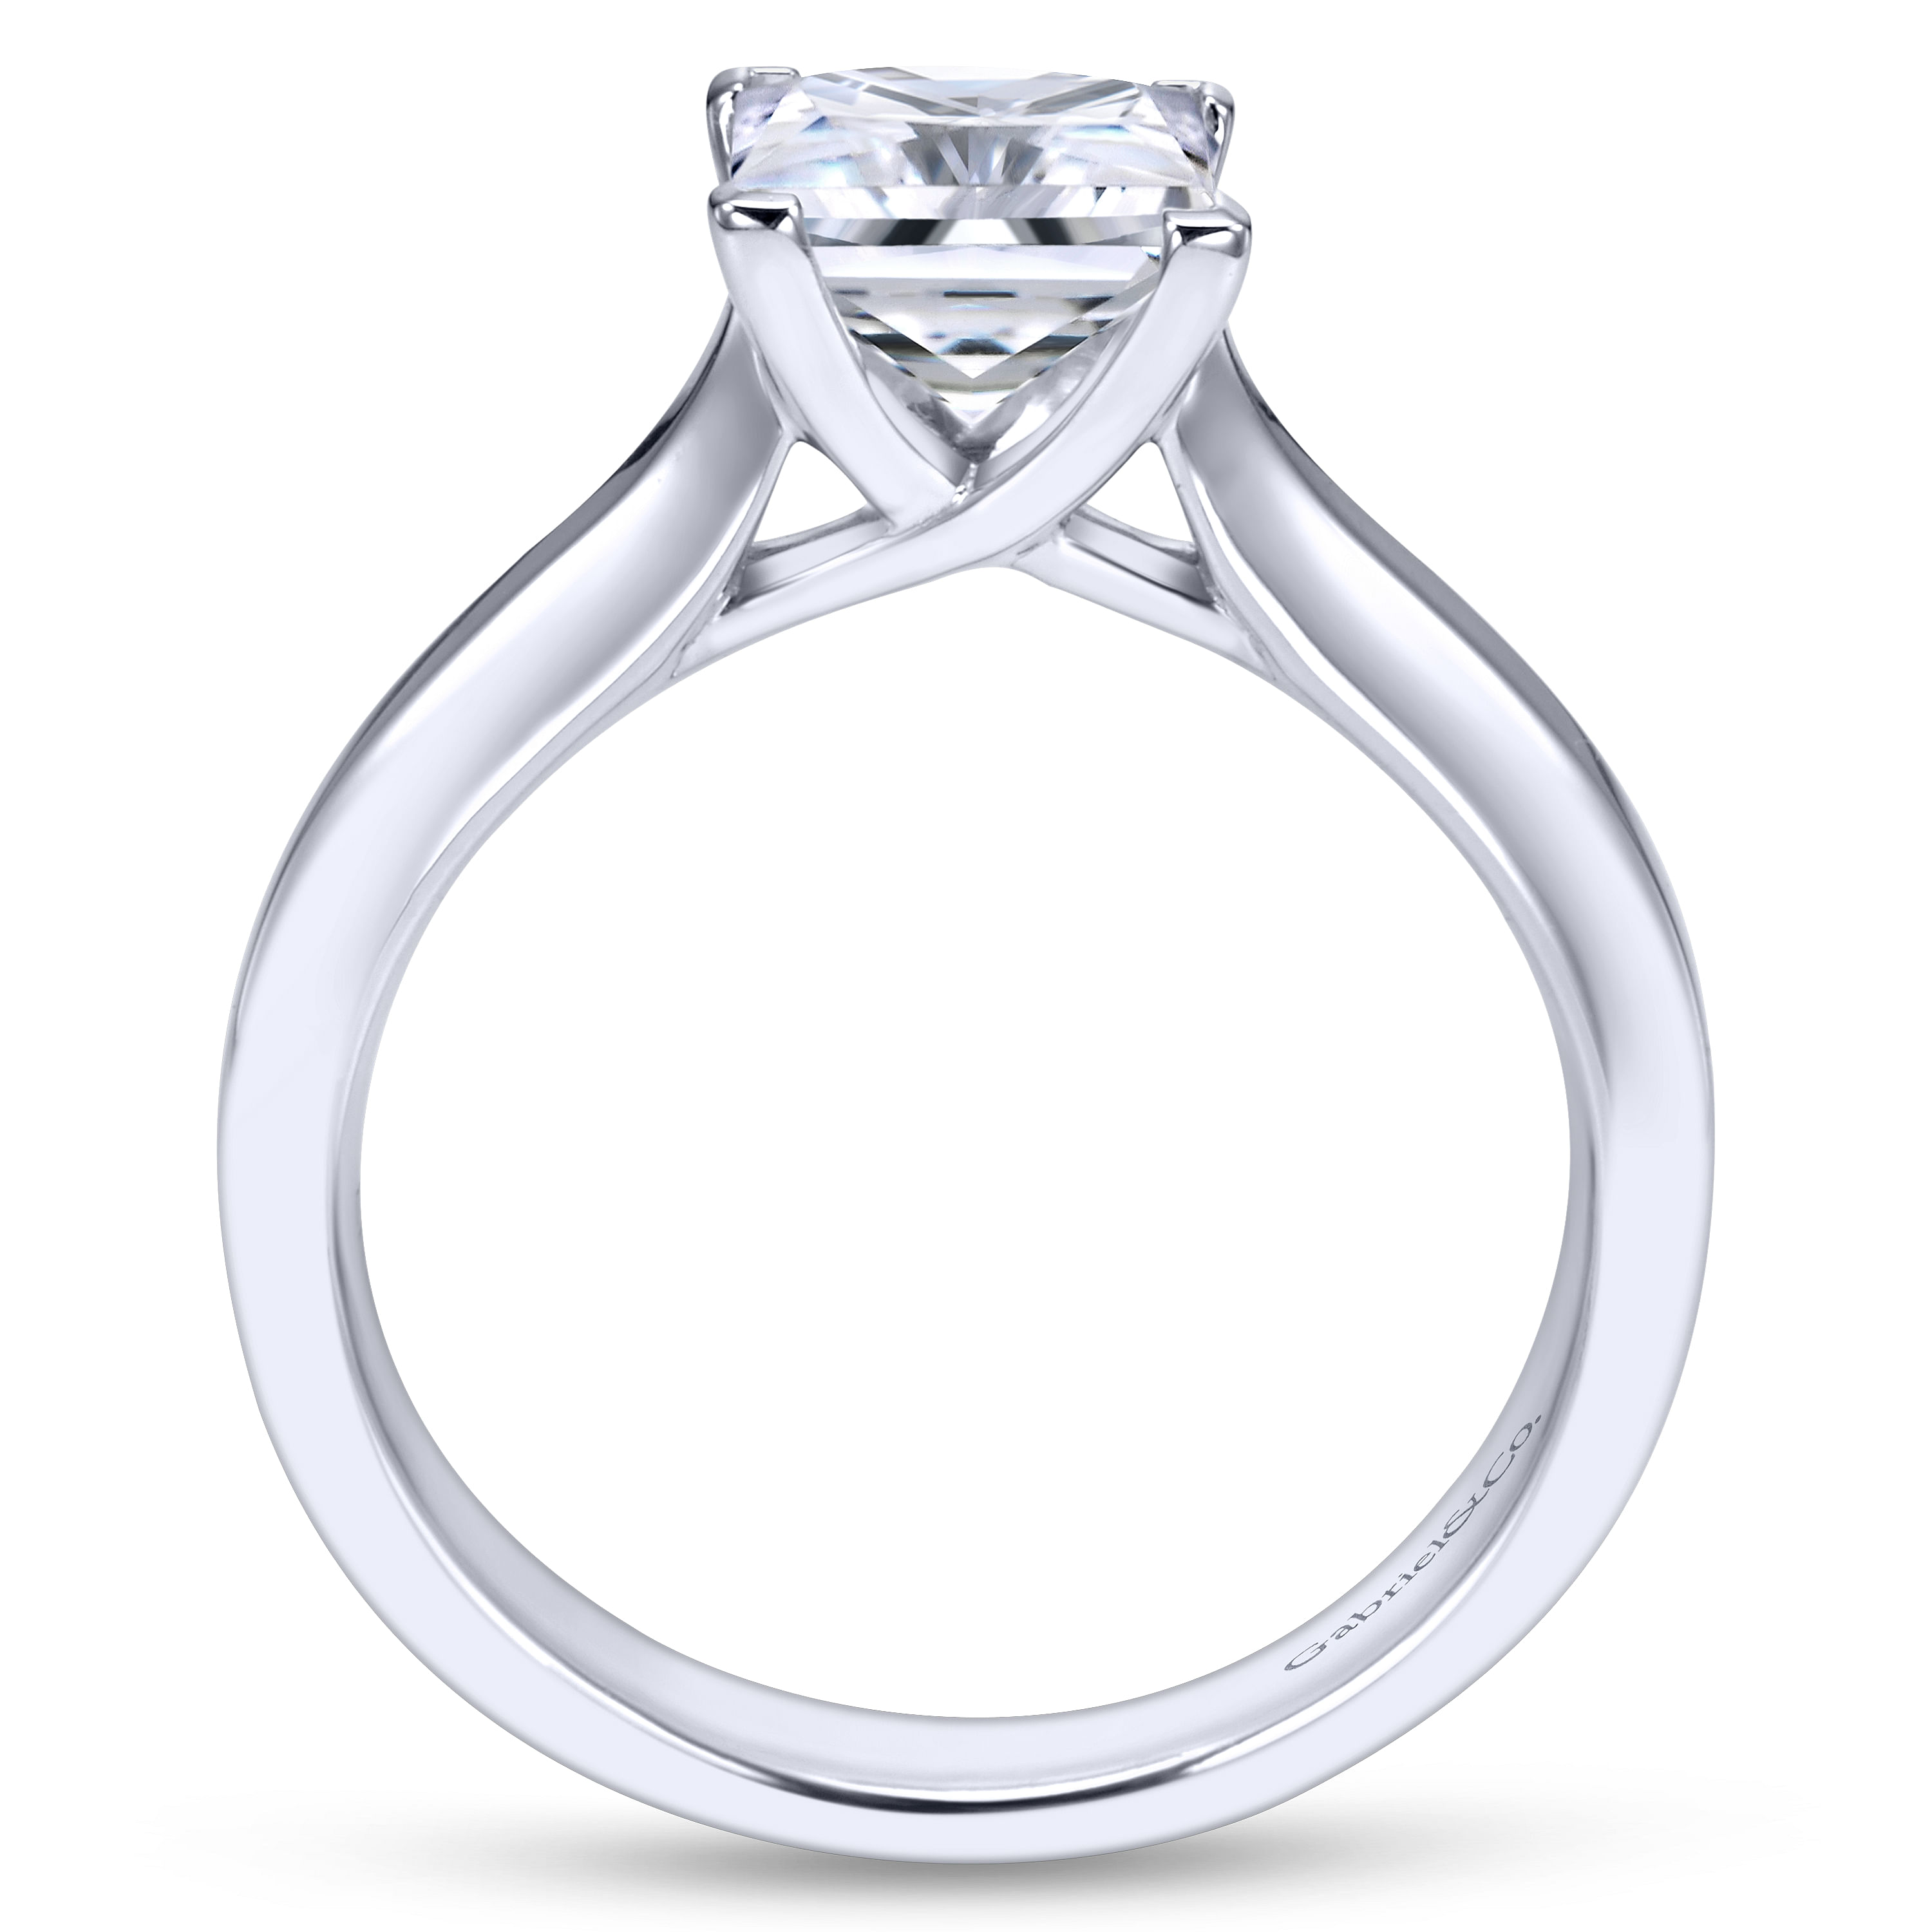 Hunter - 14K White Gold Princess Cut Diamond Engagement Ring - Shot 2